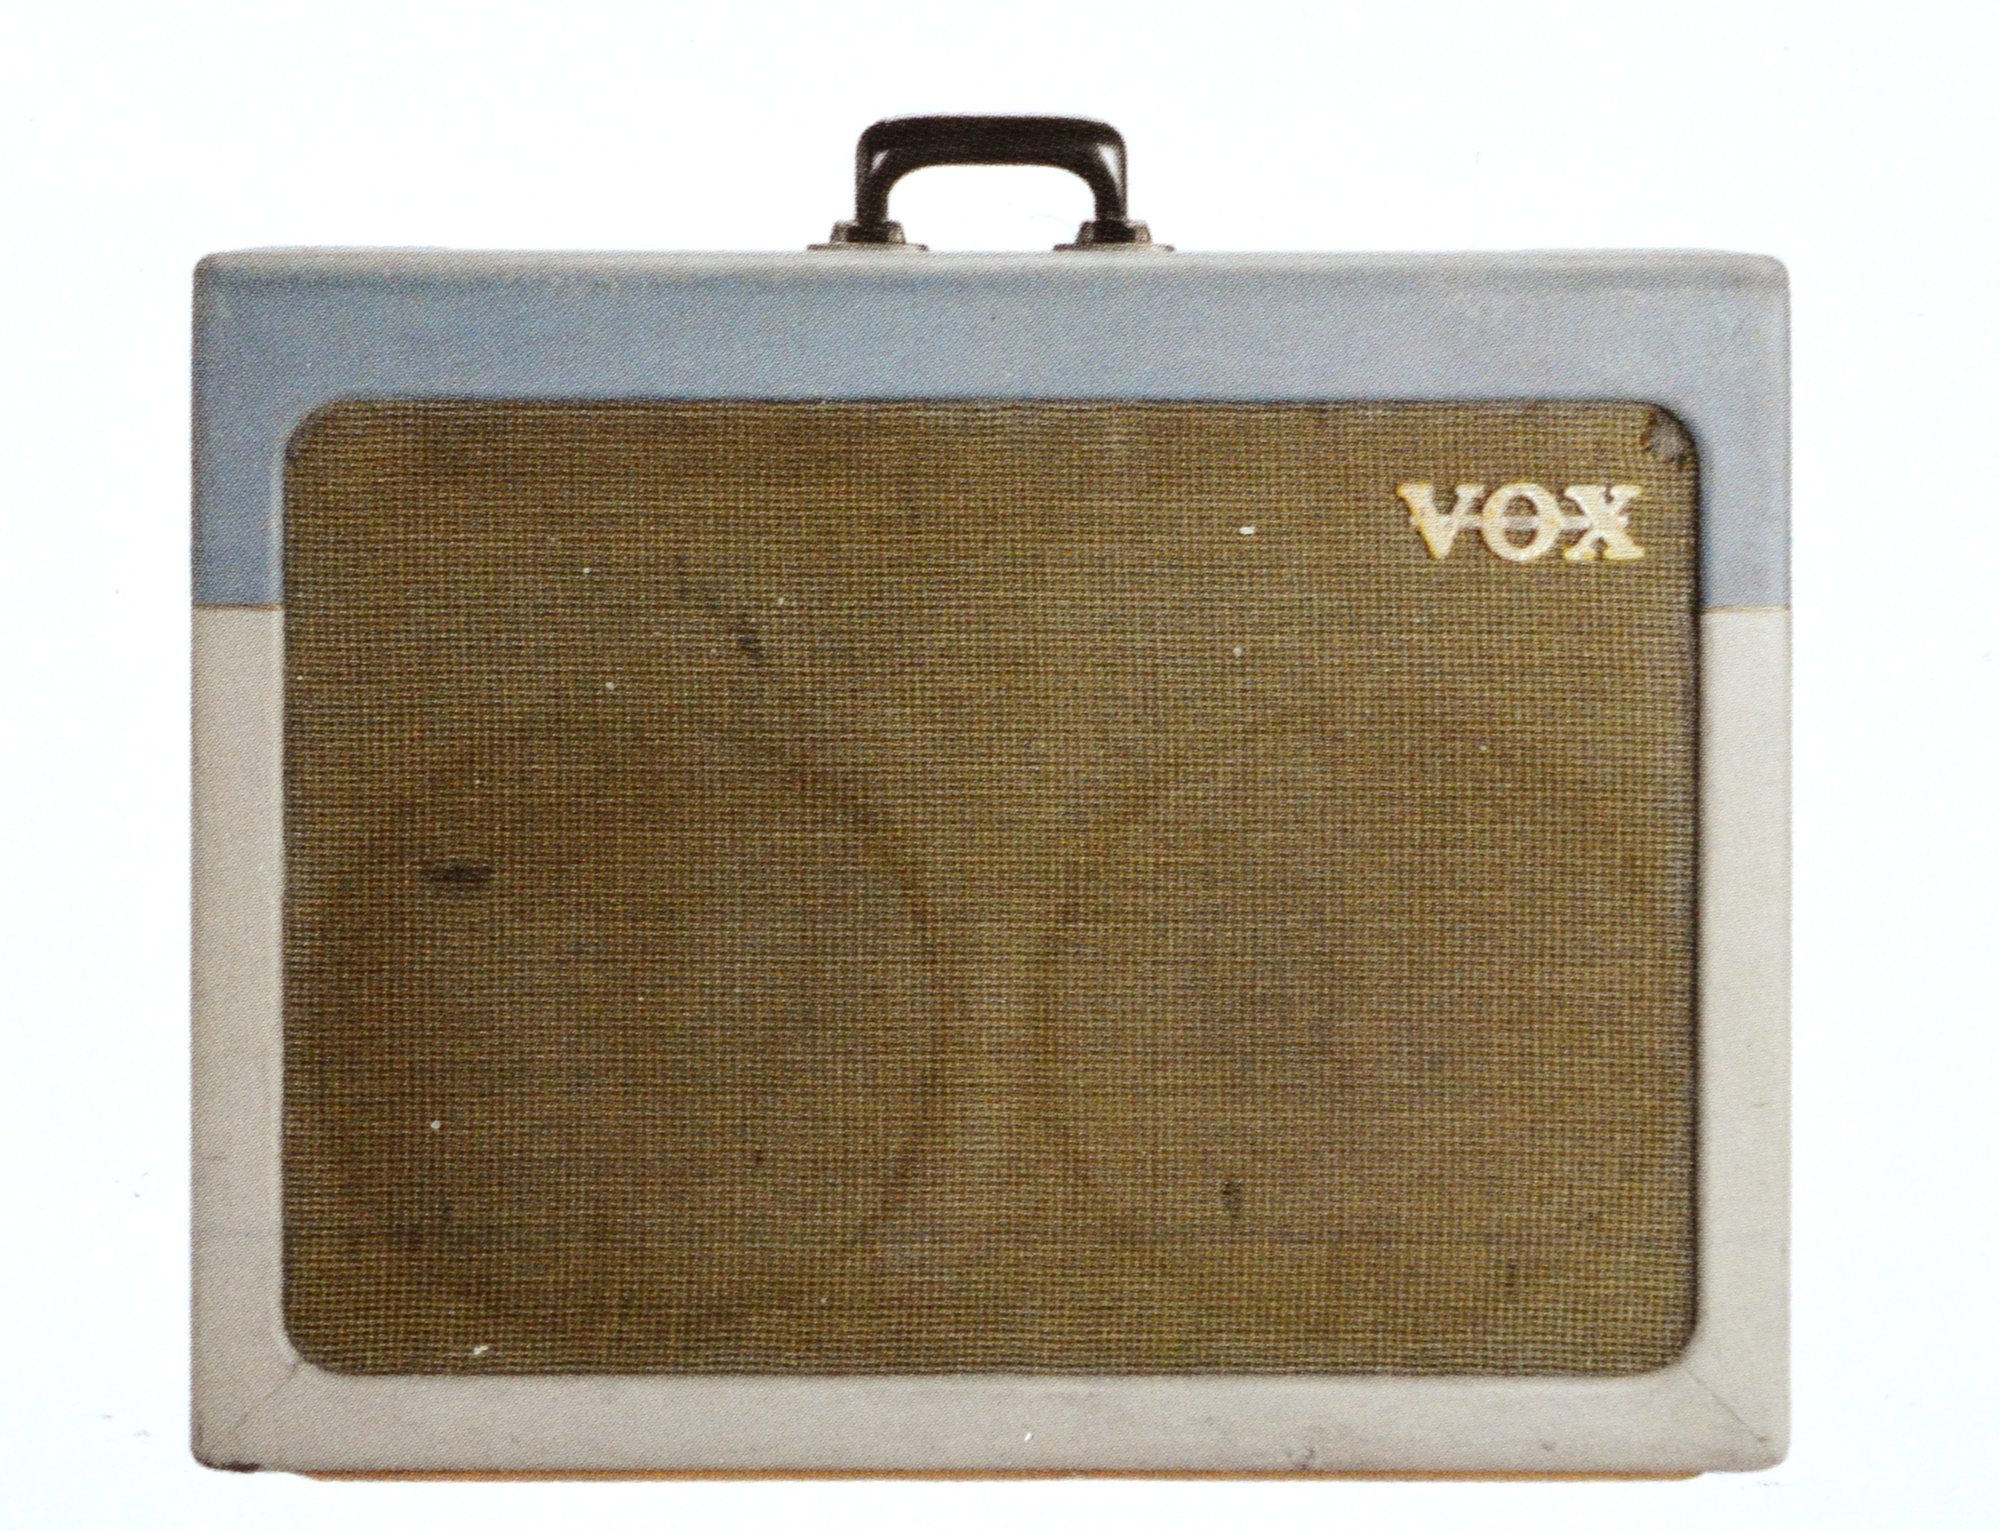 Vox amp serial number dating